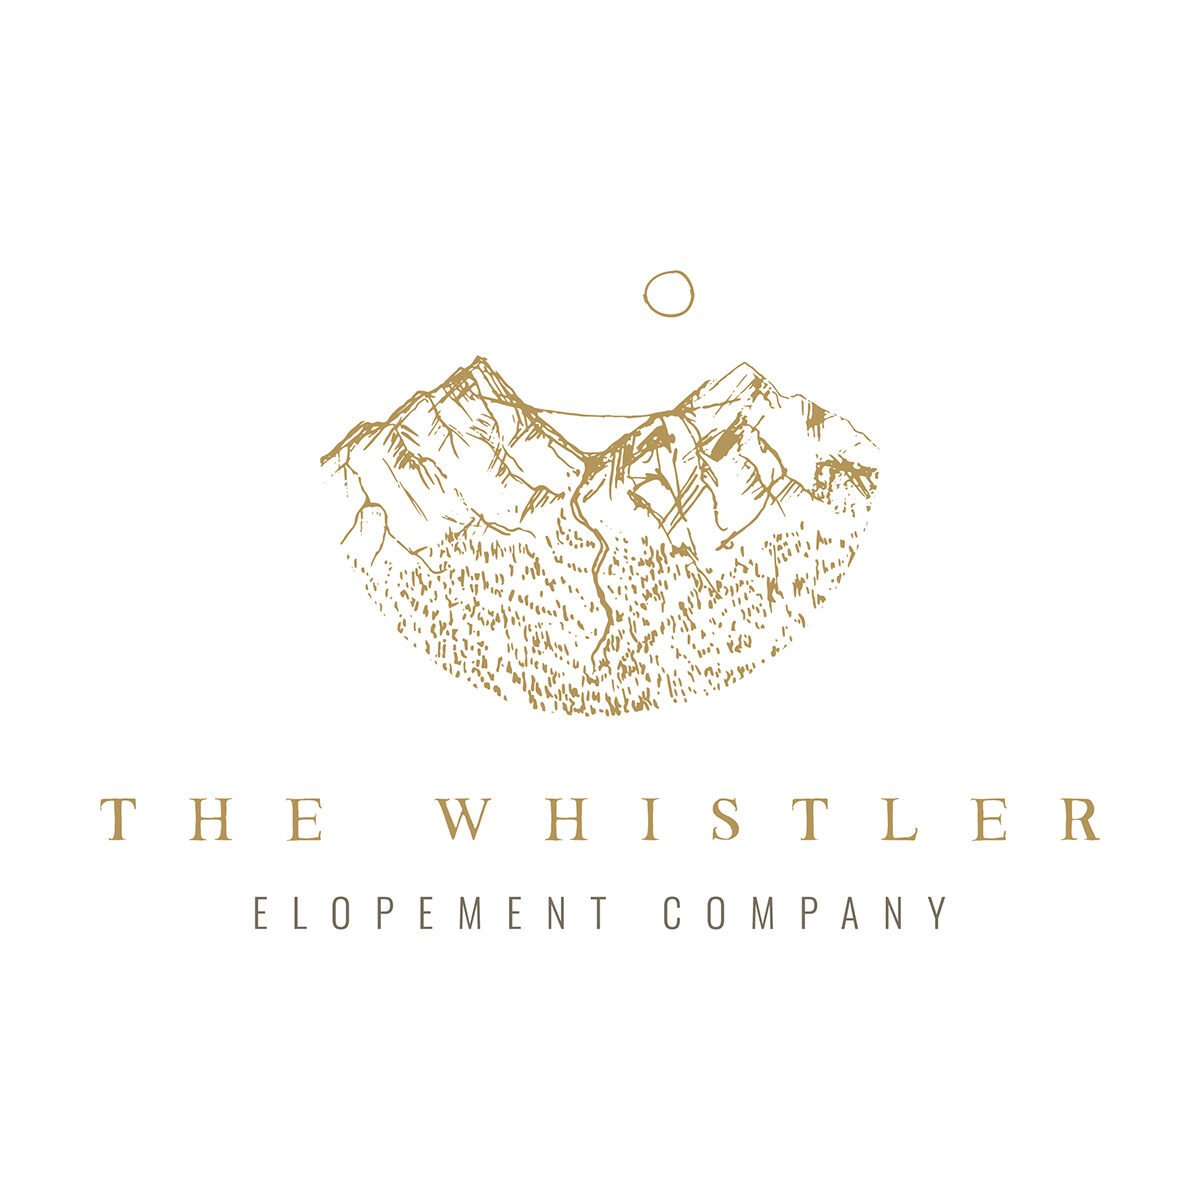 lindsay-mcghee-designs-the-whistler-elopement-company-logo